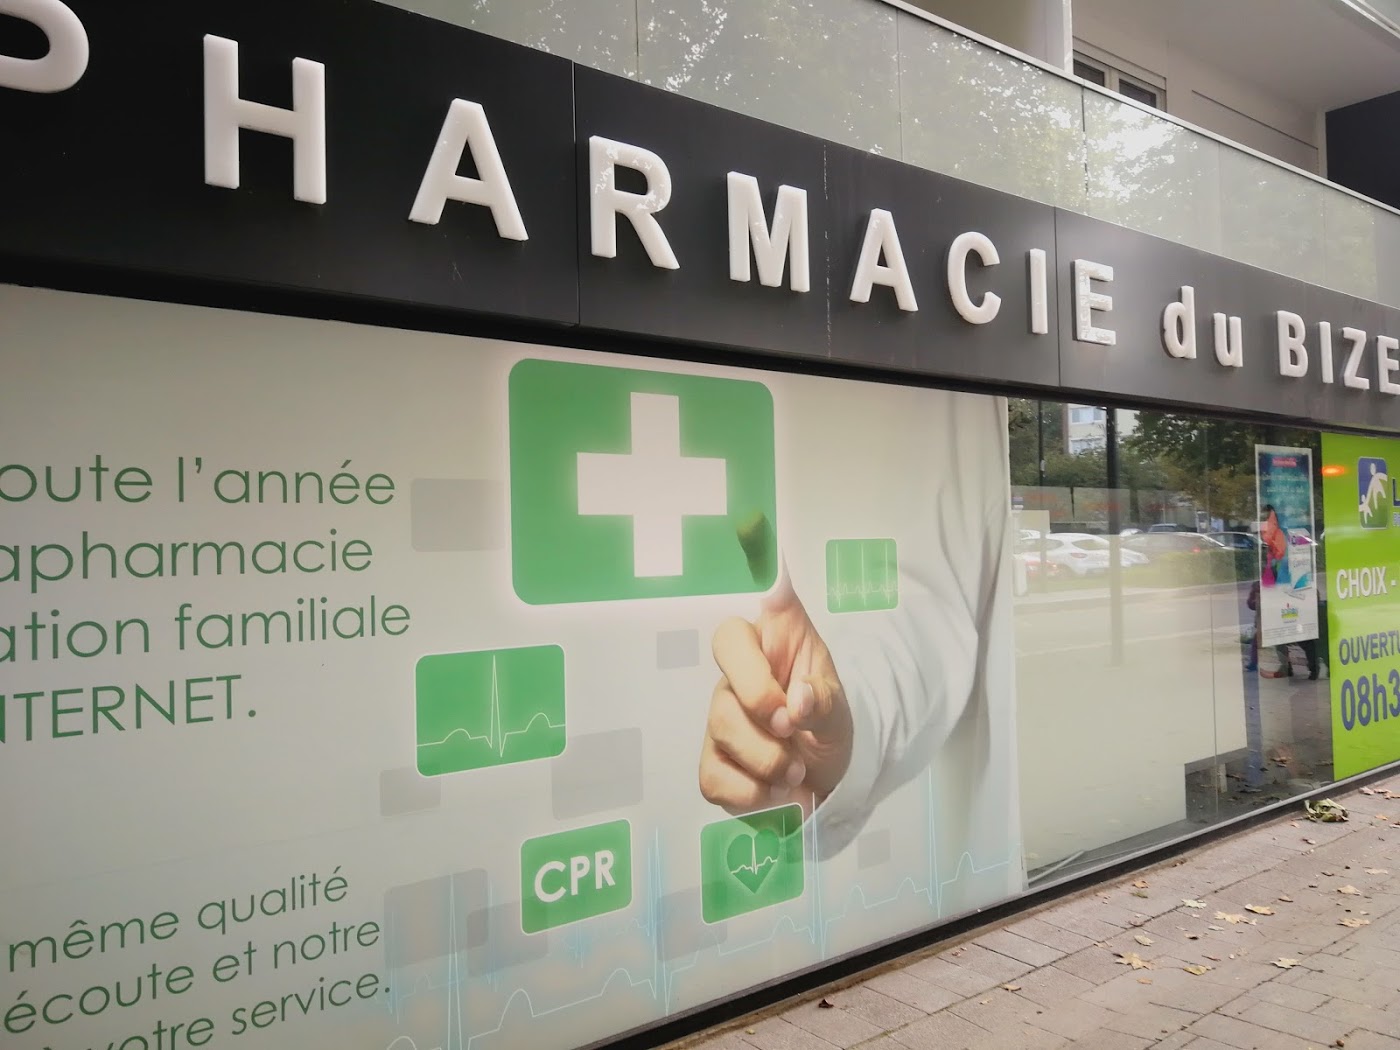 Pharmacie du Bizet - LaSante.net